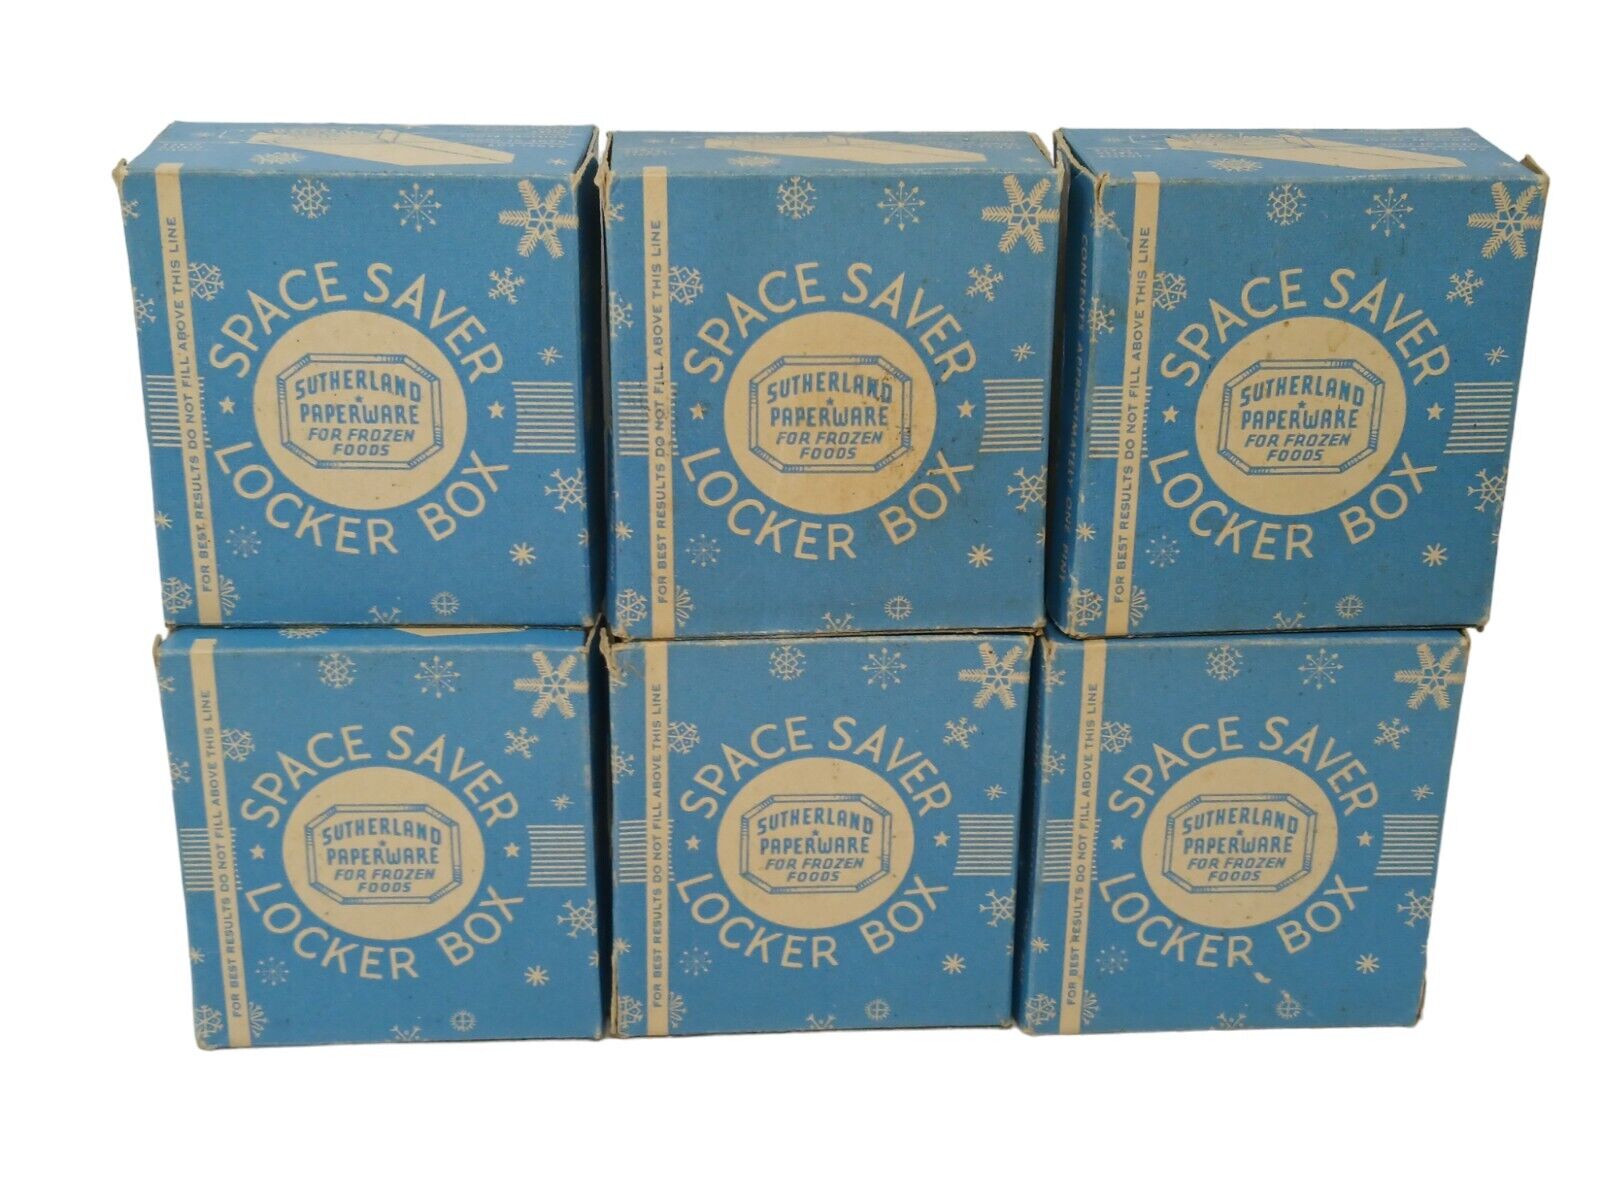 VTG Space Saver Frozen Locker Boxes Pint Boxes 1940s Sutherland Paperware (6)